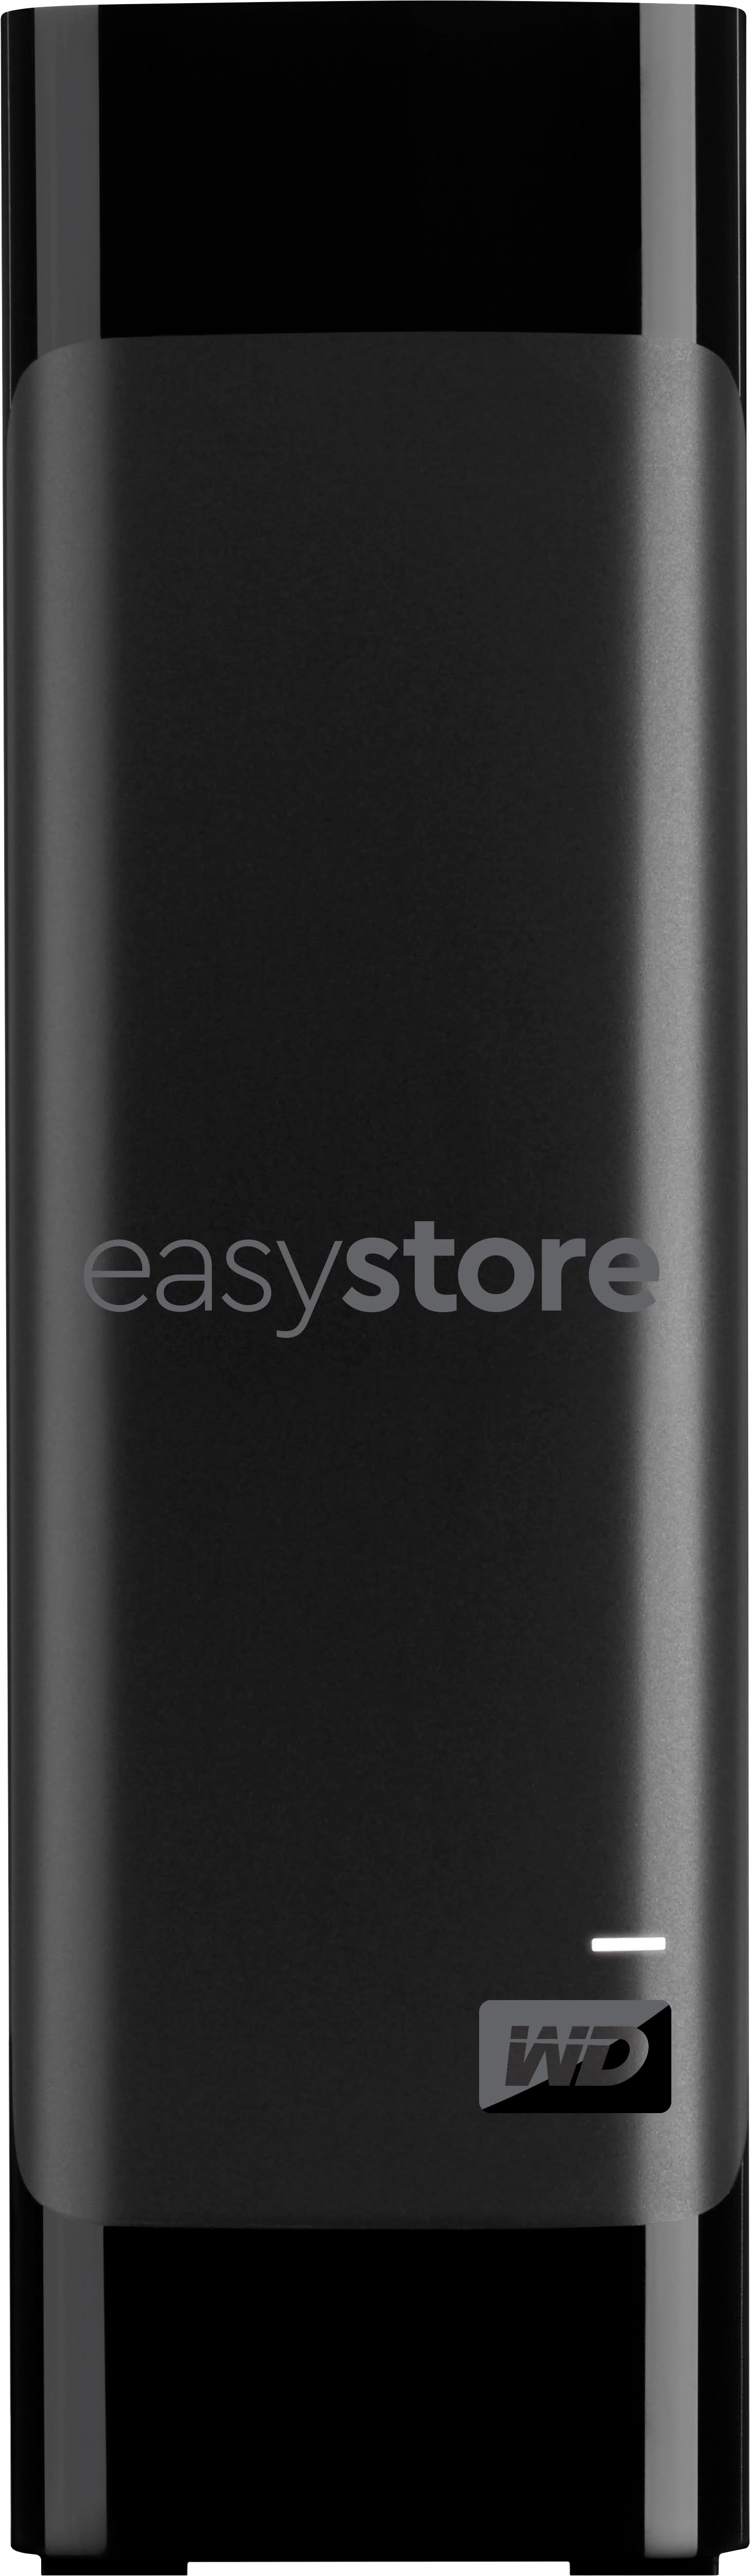 WD easystore 20TB External USB 3.0 Hard Drive Black WDBAMA0200HBK-NESN -  Best Buy